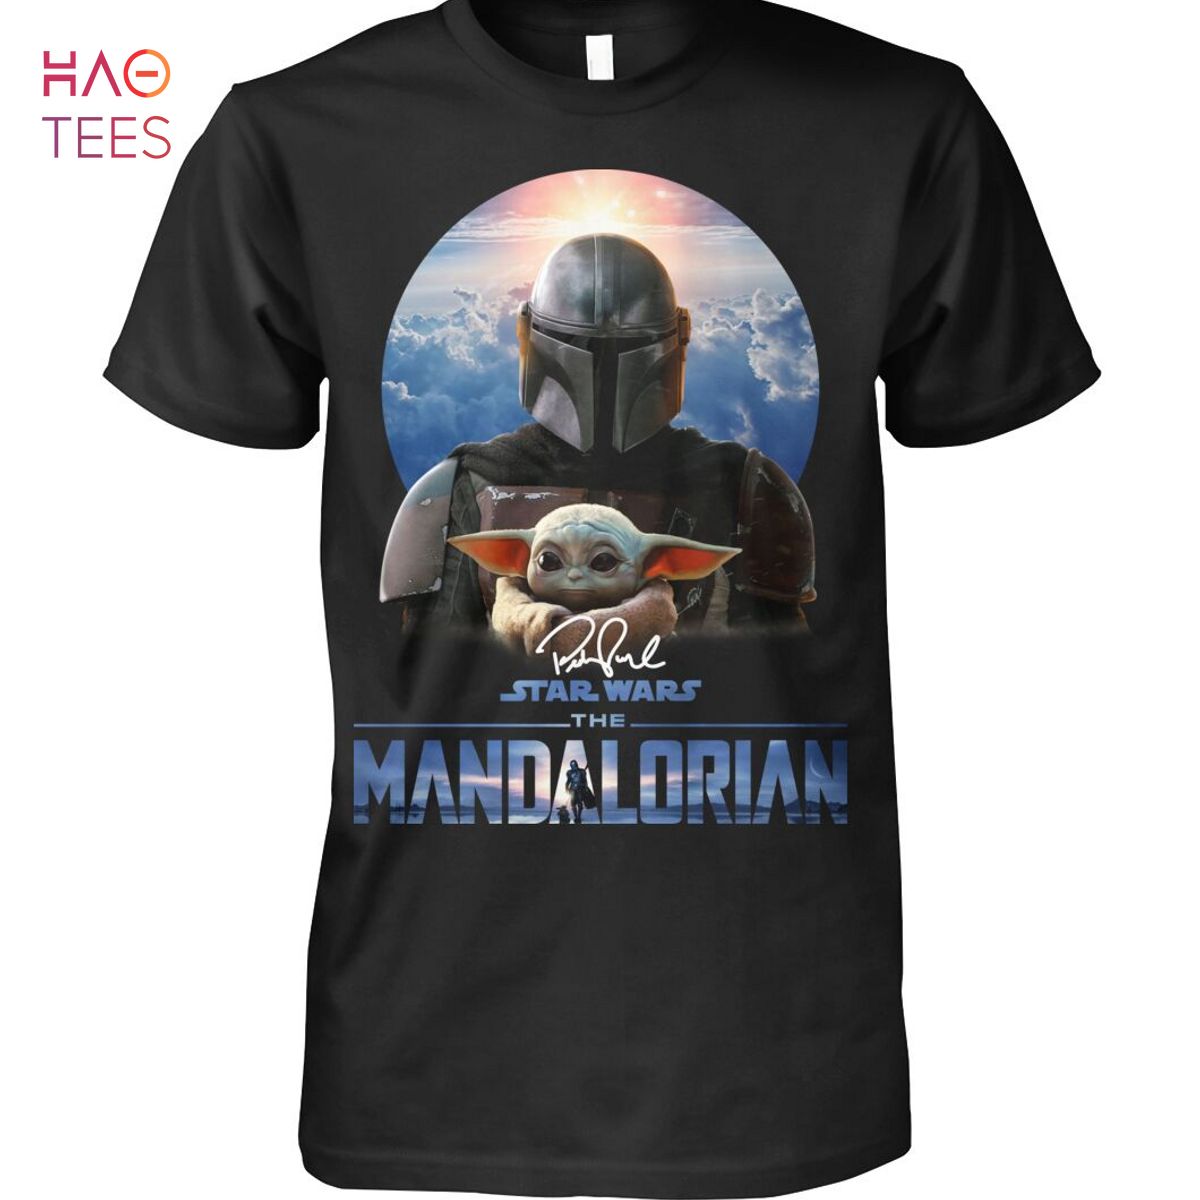 HOT Mandalorian Shirt Limited Edition